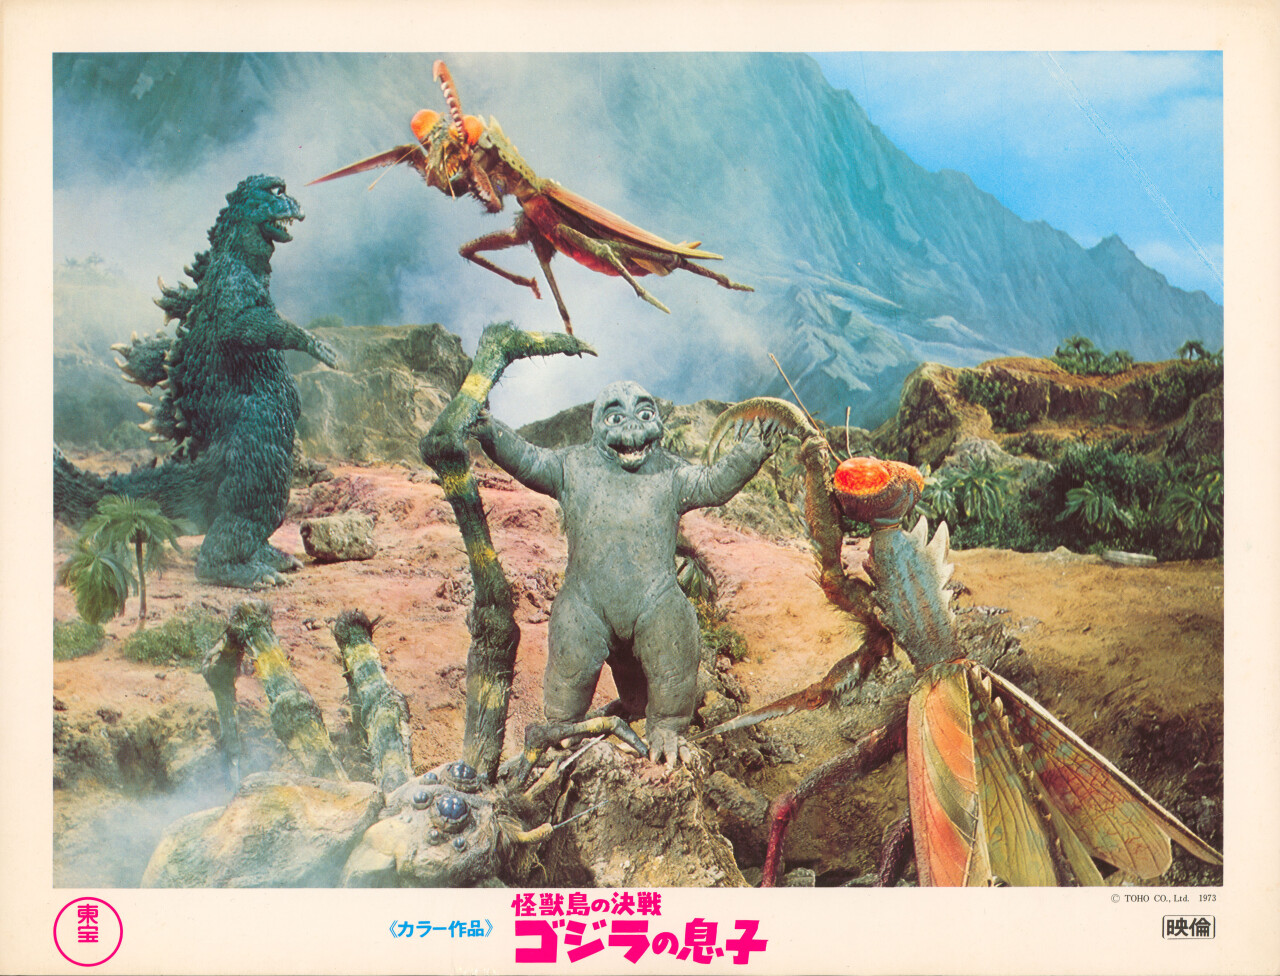 Сын Годзиллы (Son of Godzilla, 1967), режиссёр Дзюн Фукуда, японский постер к фильму (монстры, 1973 год)